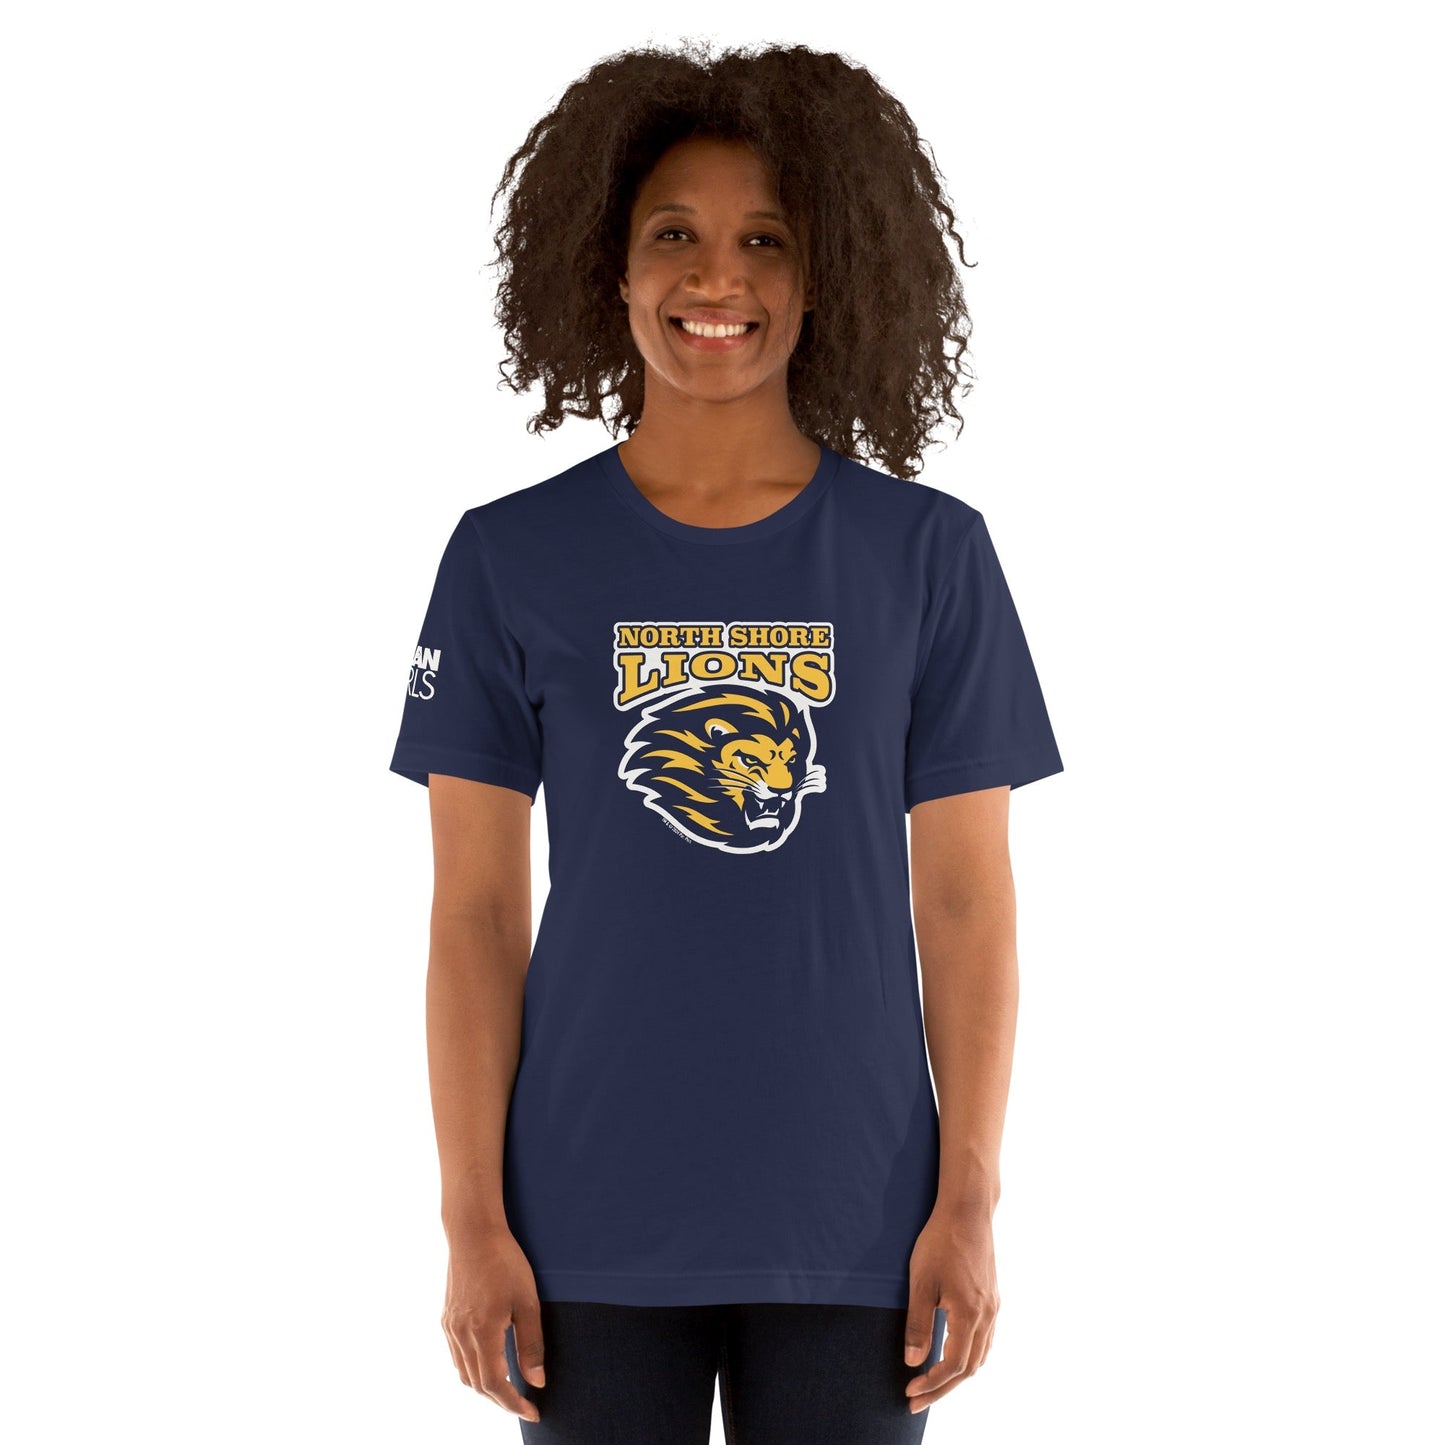 Mean Girls Musical Lions Adult T - Shirt - Paramount Shop